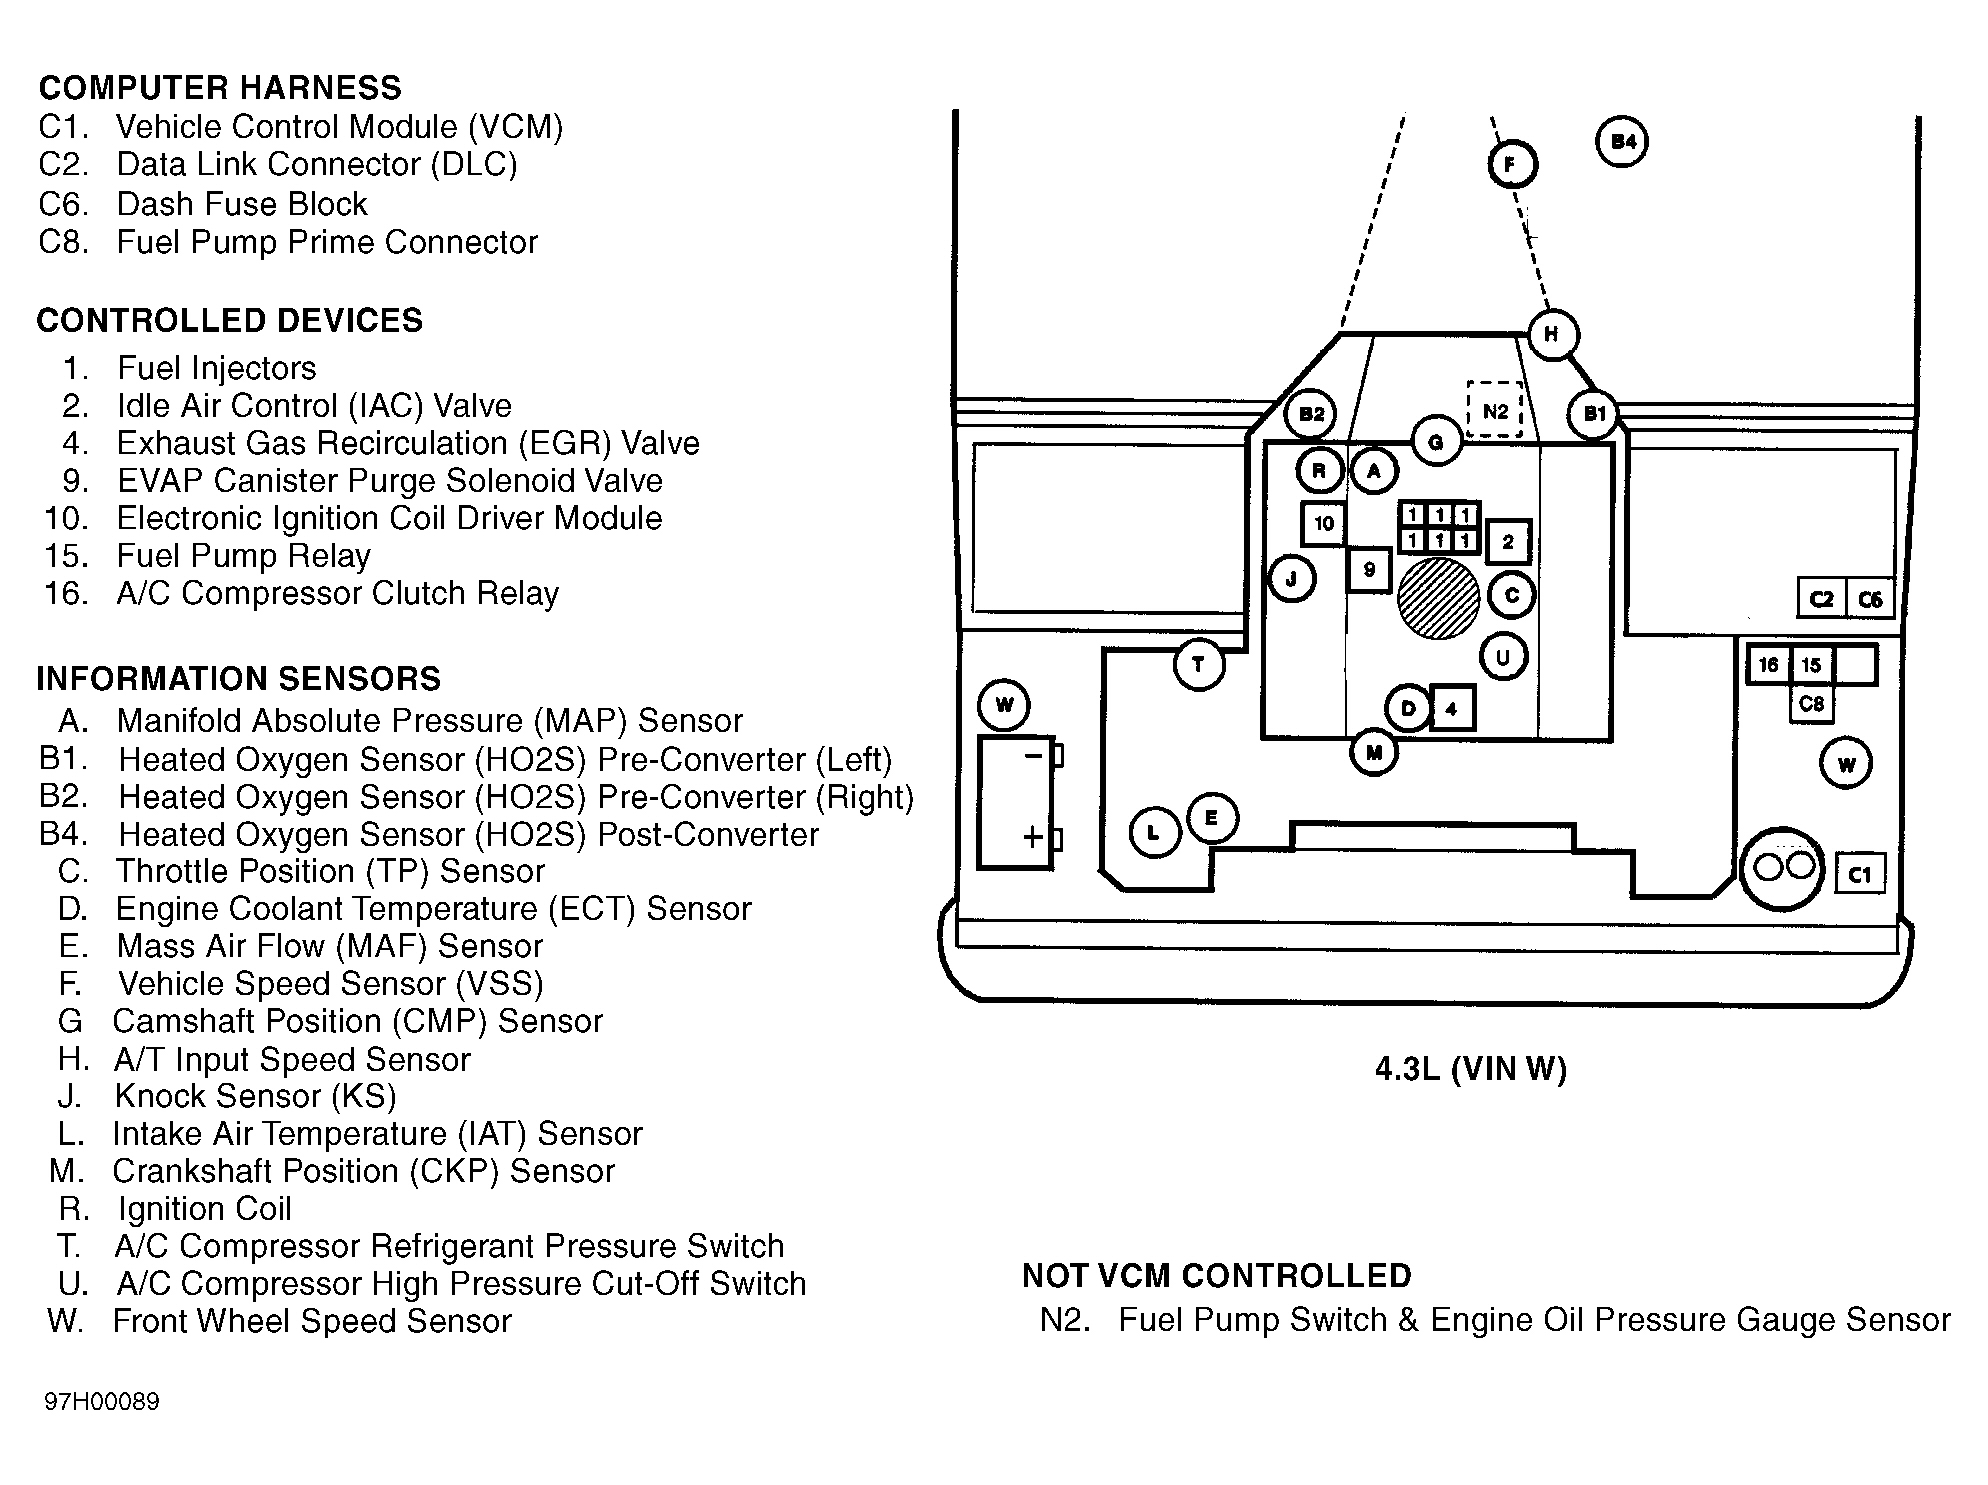 GMC Forward Control P3500 1997 - Component Locations -  Engine Compartment (4.3L VIN W)